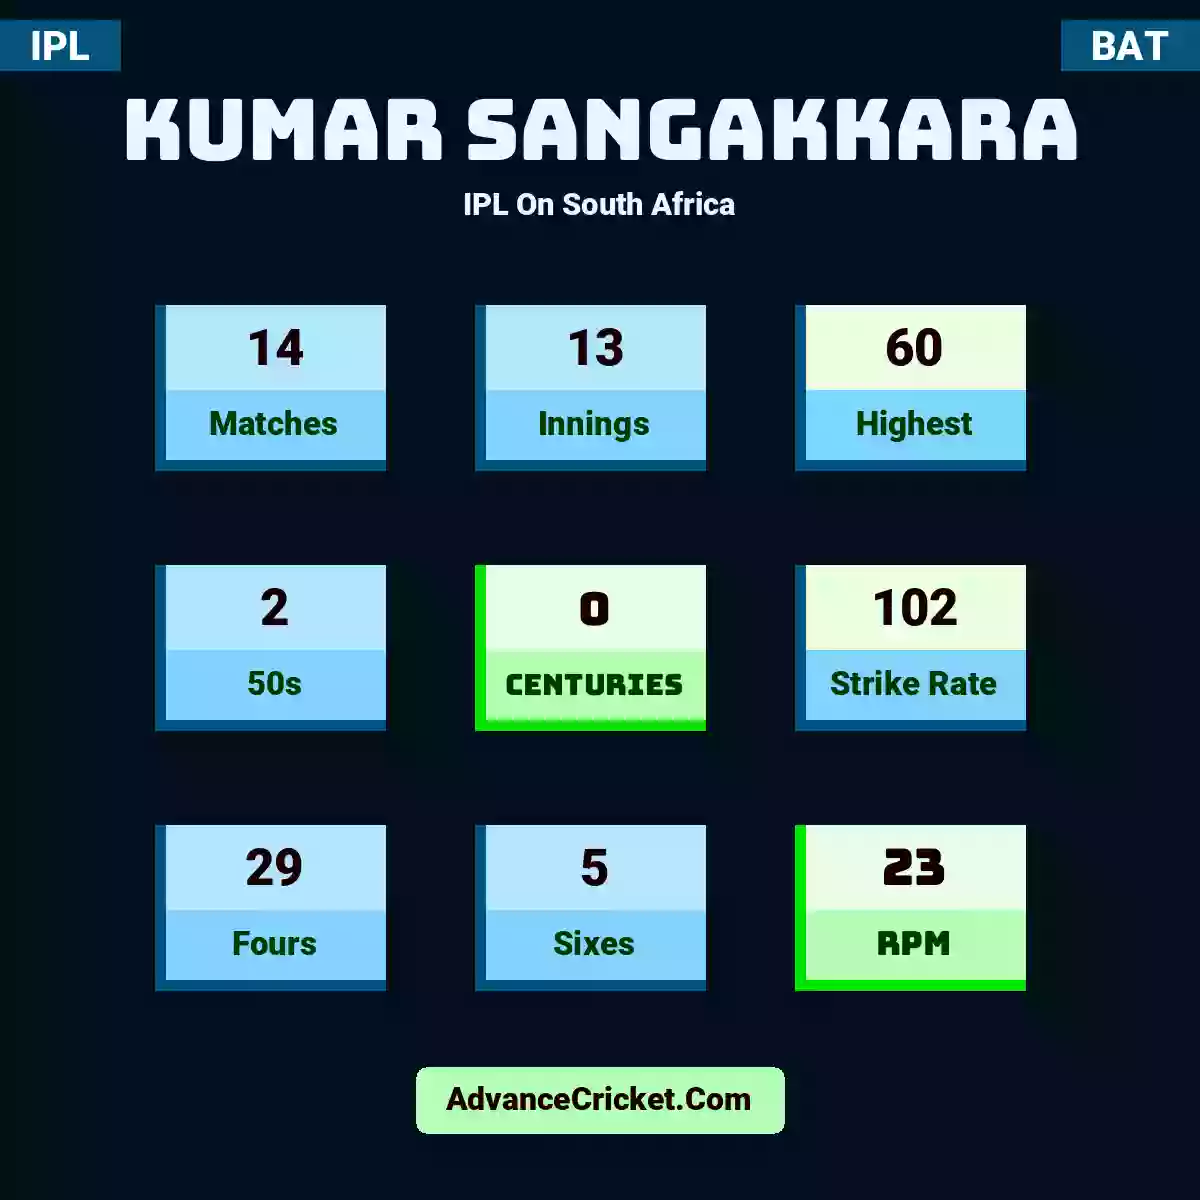 Kumar Sangakkara IPL  On South Africa, Kumar Sangakkara played 14 matches, scored 60 runs as highest, 2 half-centuries, and 0 centuries, with a strike rate of 102. K.Sangakkara hit 29 fours and 5 sixes, with an RPM of 23.